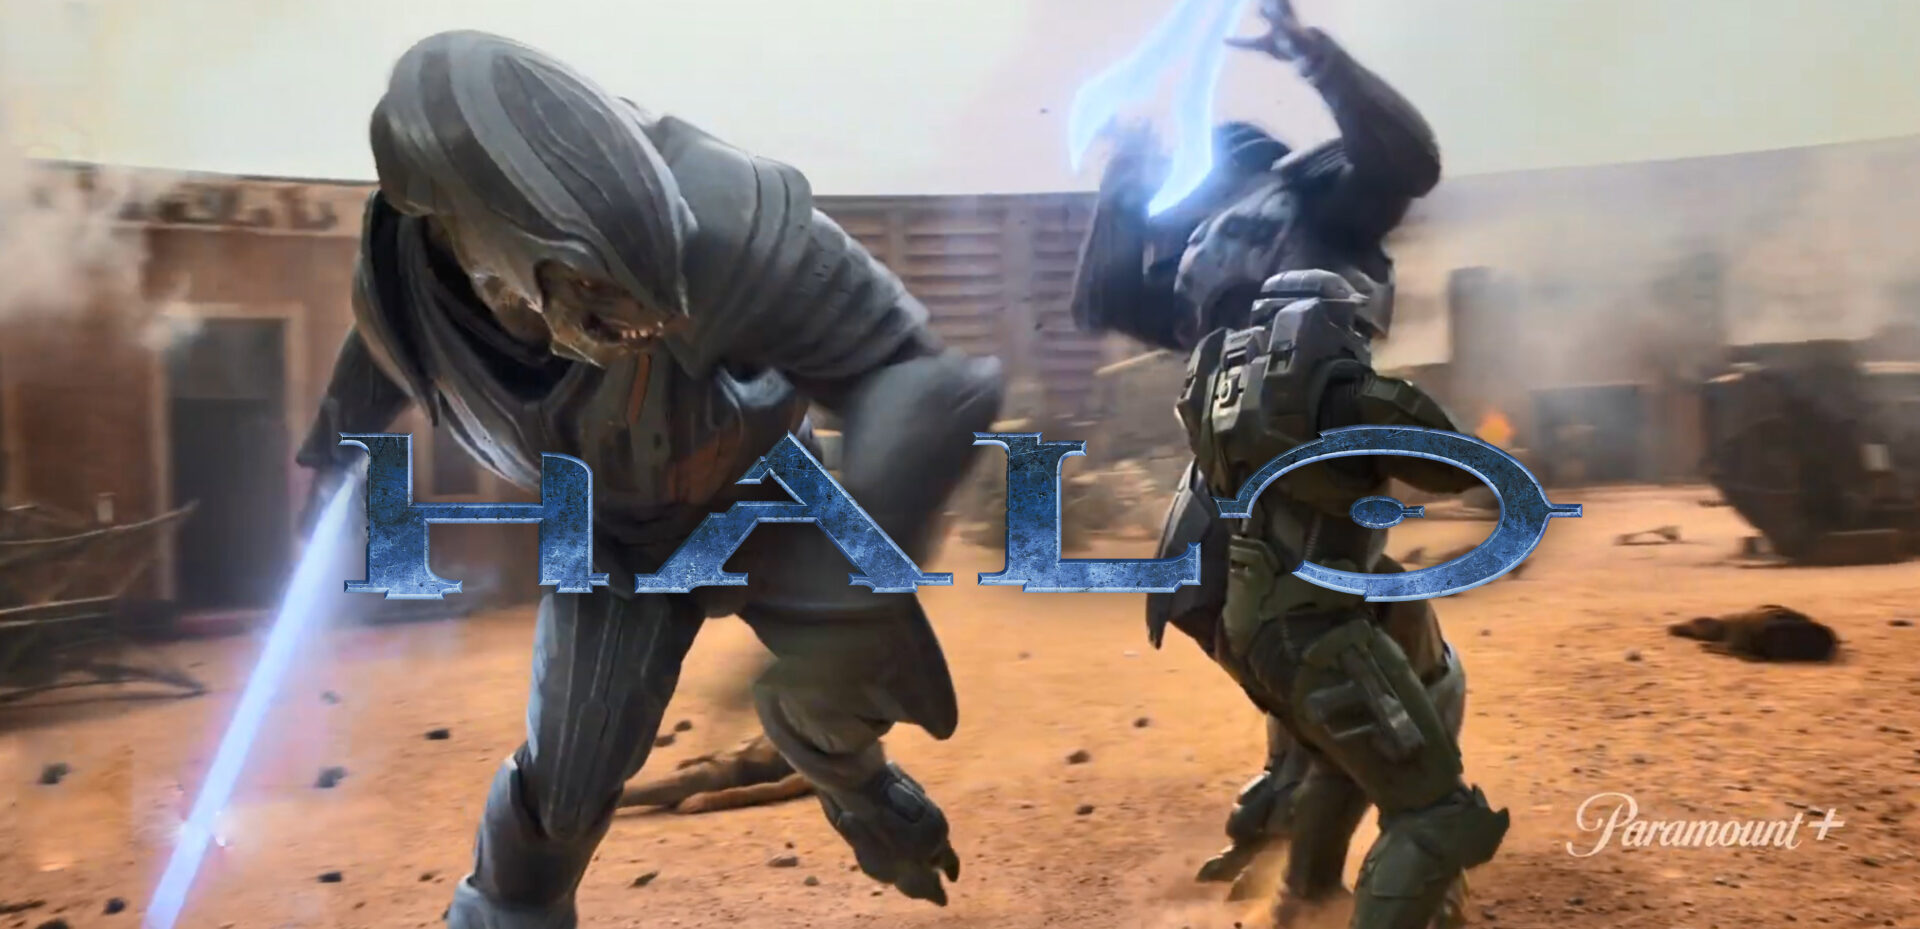 Halo TV series moves to Paramount Plus